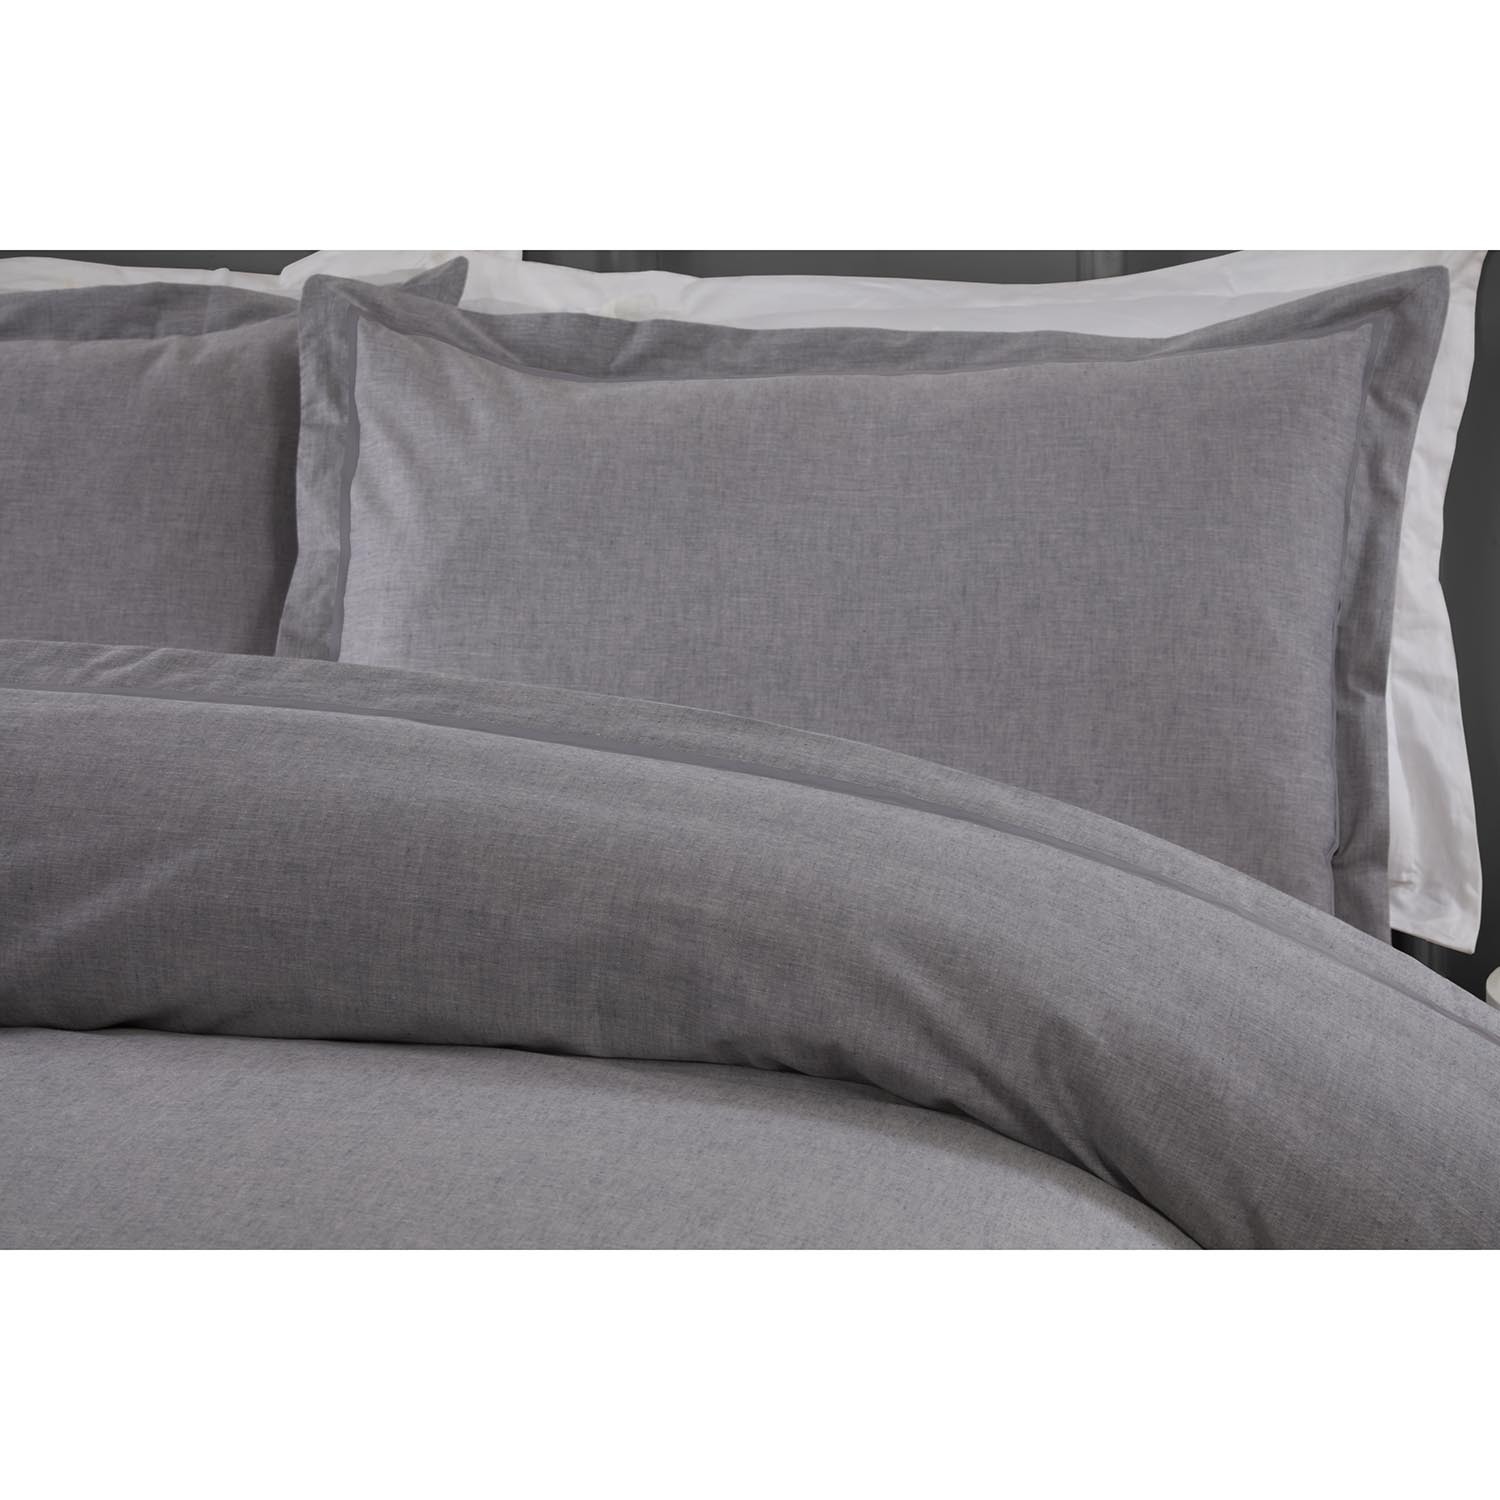 Josephine Oxford Edge Duvet Cover and Pillowcase Set - Double Image 3